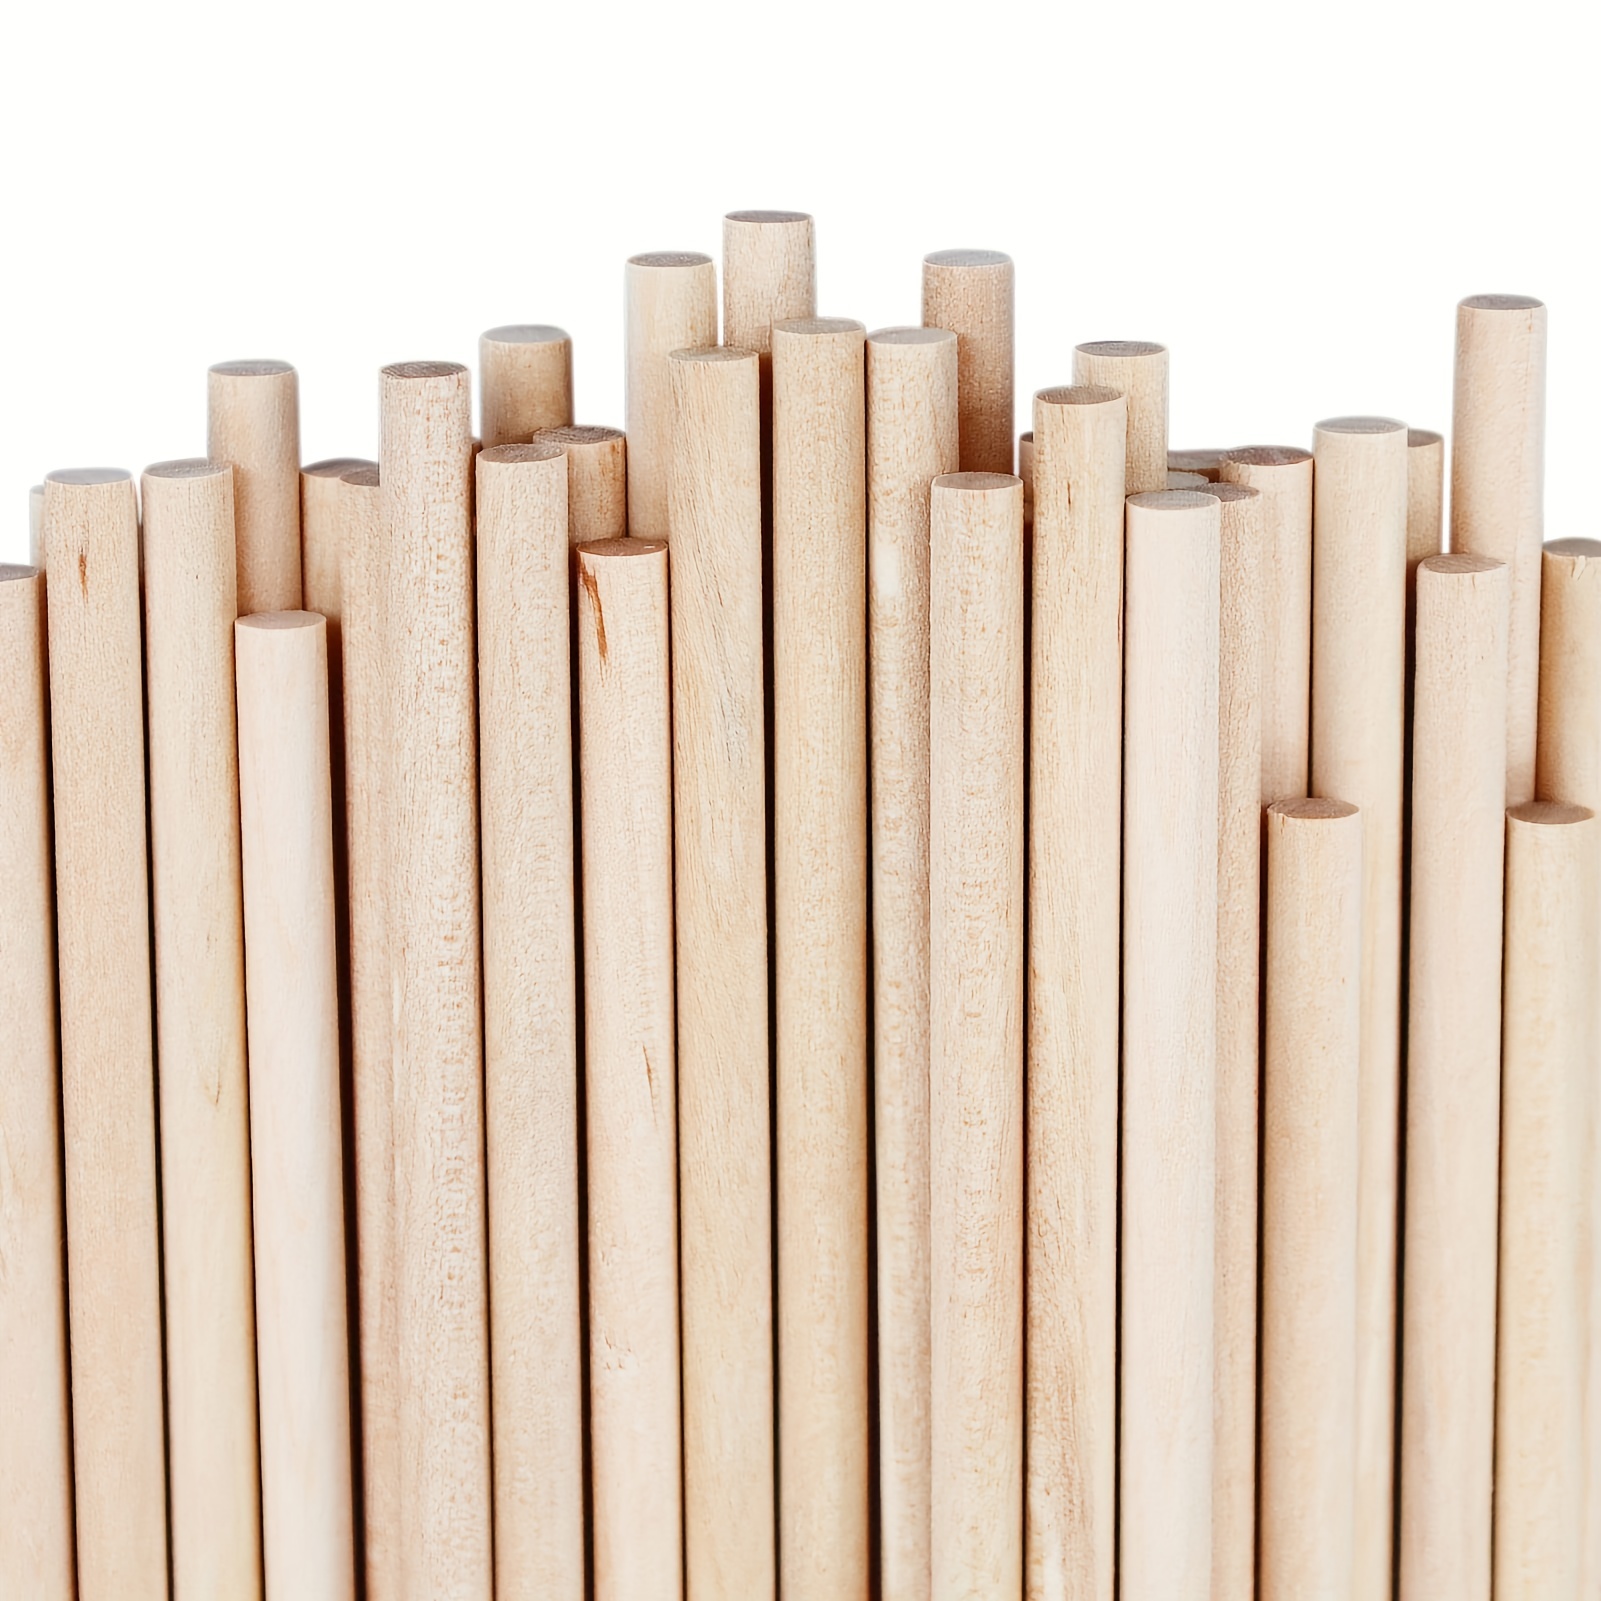 Wooden Sticks, Wood Dowel Rods 30cm, 3 4 5 6 8 10mm Optional, Unfinished  Wooden Dowel Sticks Wooden Poles, Small Wood Building Stick Craft